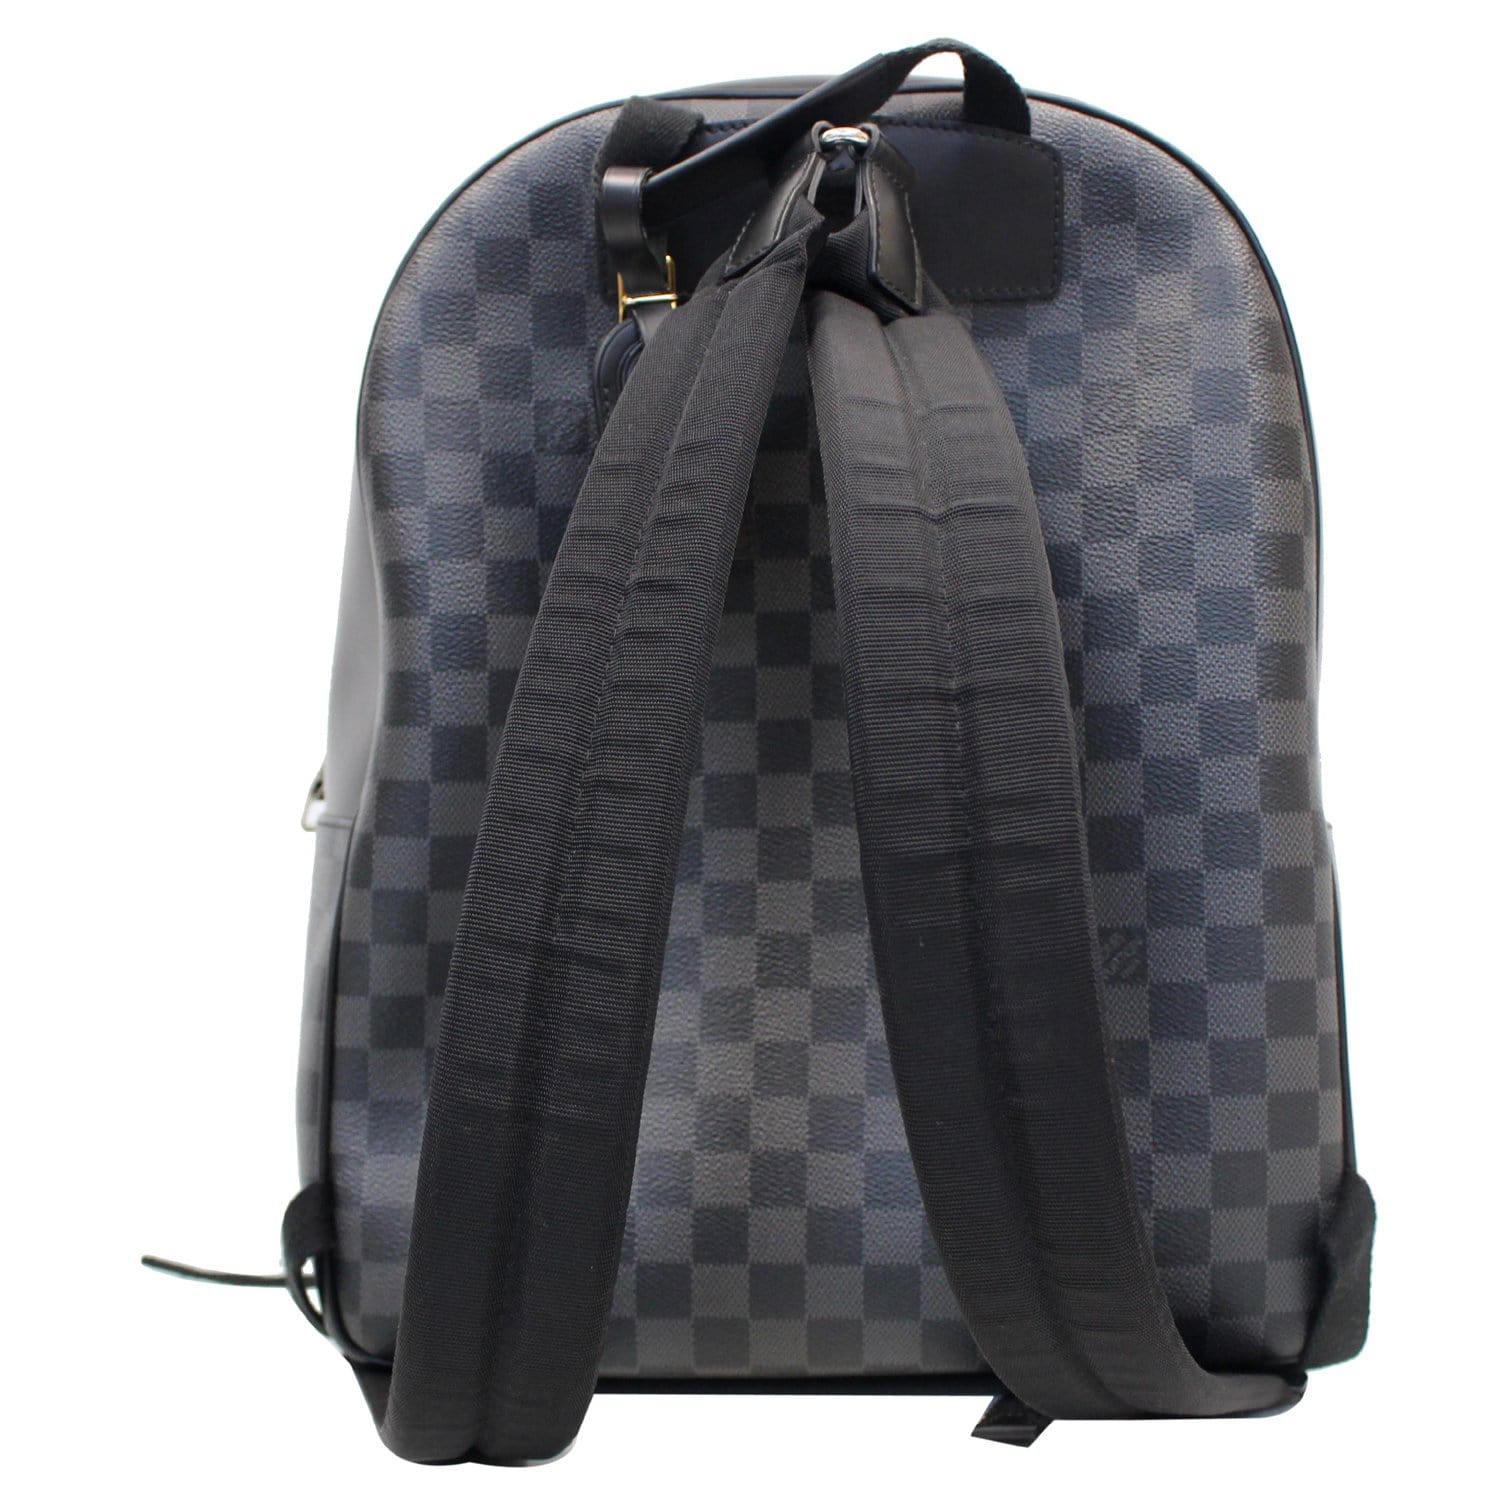 Louis Vuitton Josh Damier Graphite Backpack Bag - DDH